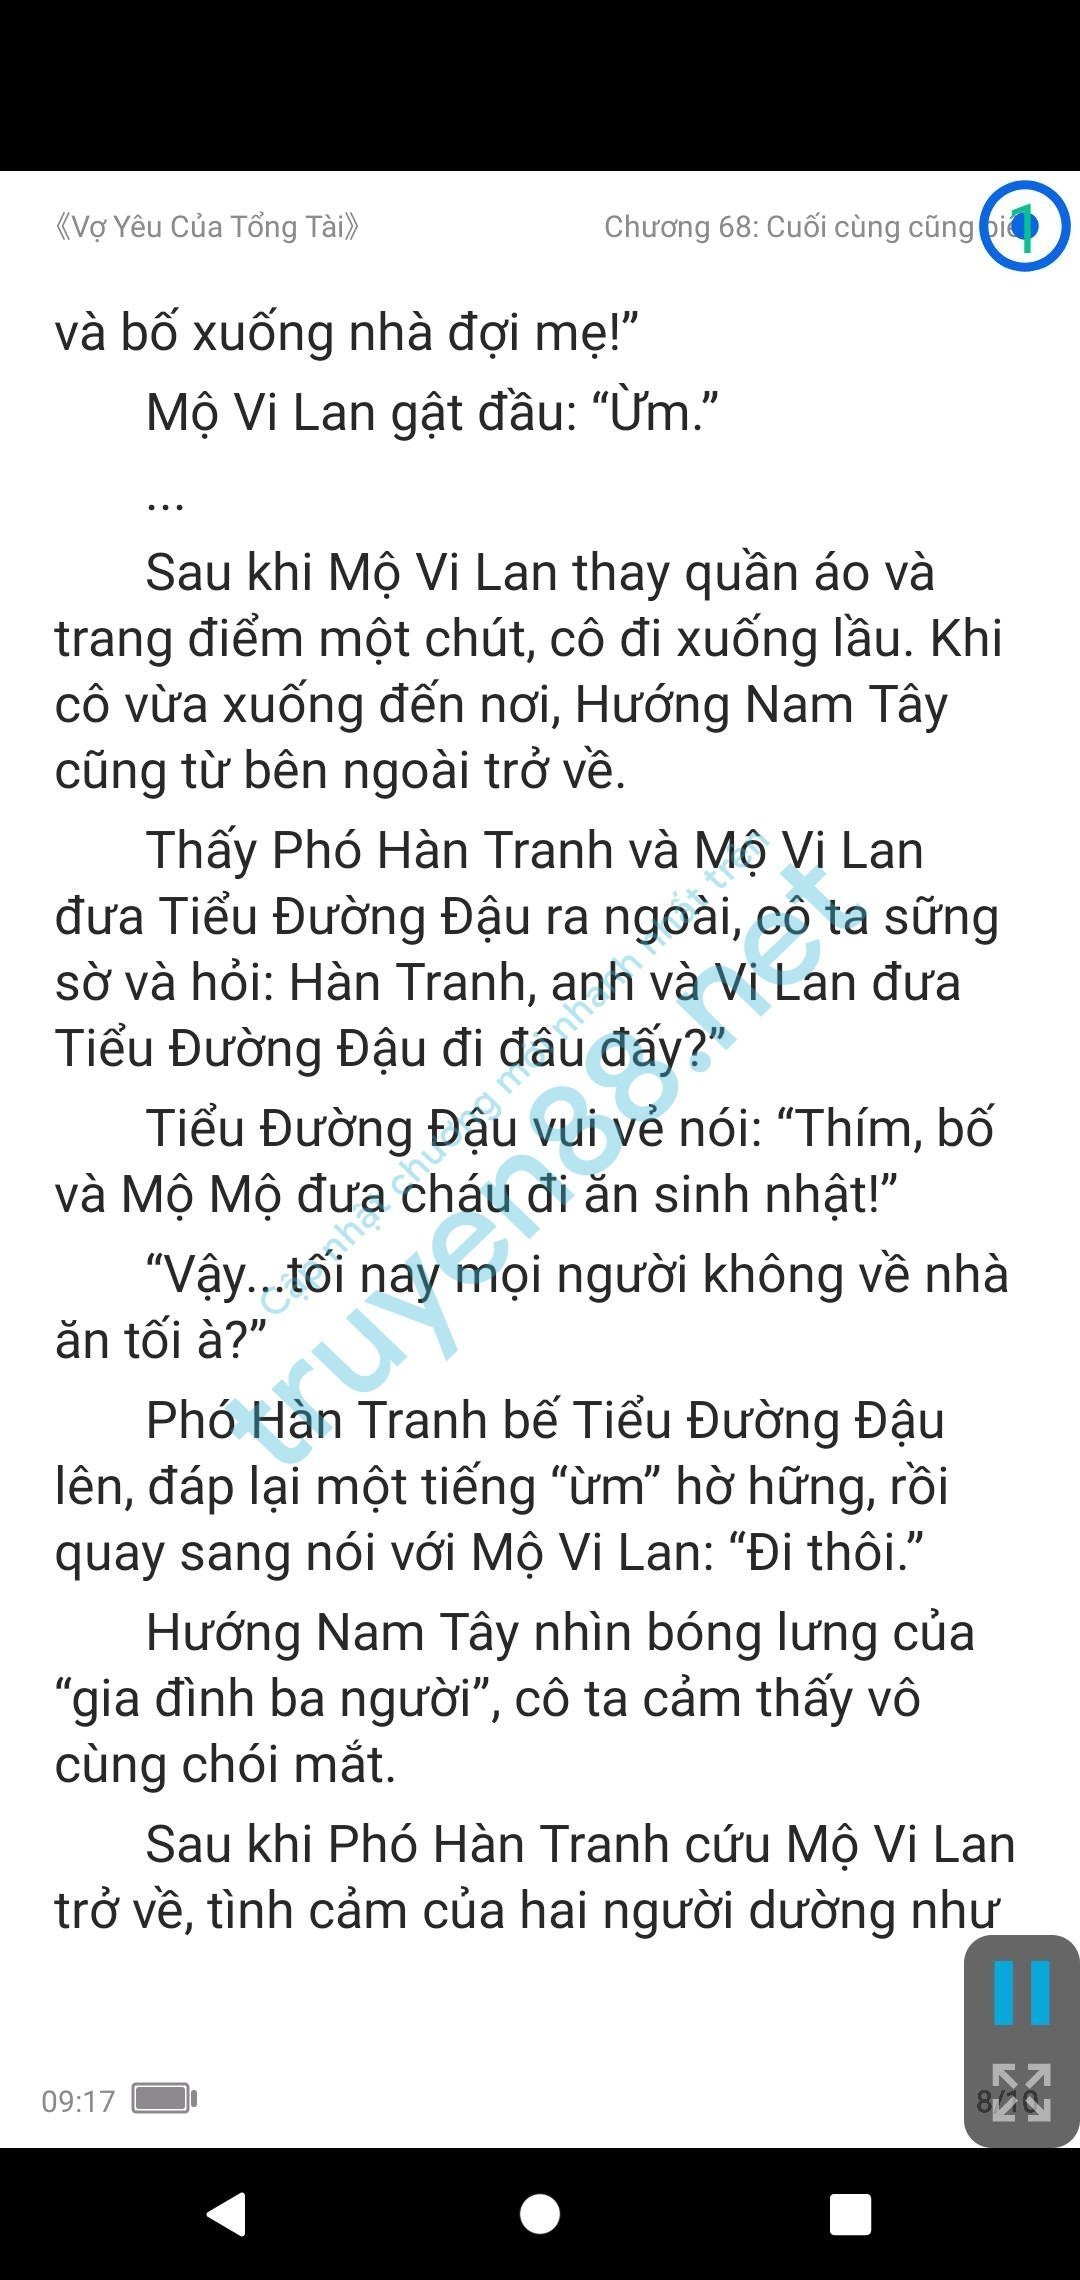 vo-yeu-cua-tong-tai-mo-vi-lan--pho-han-tranh-68-0